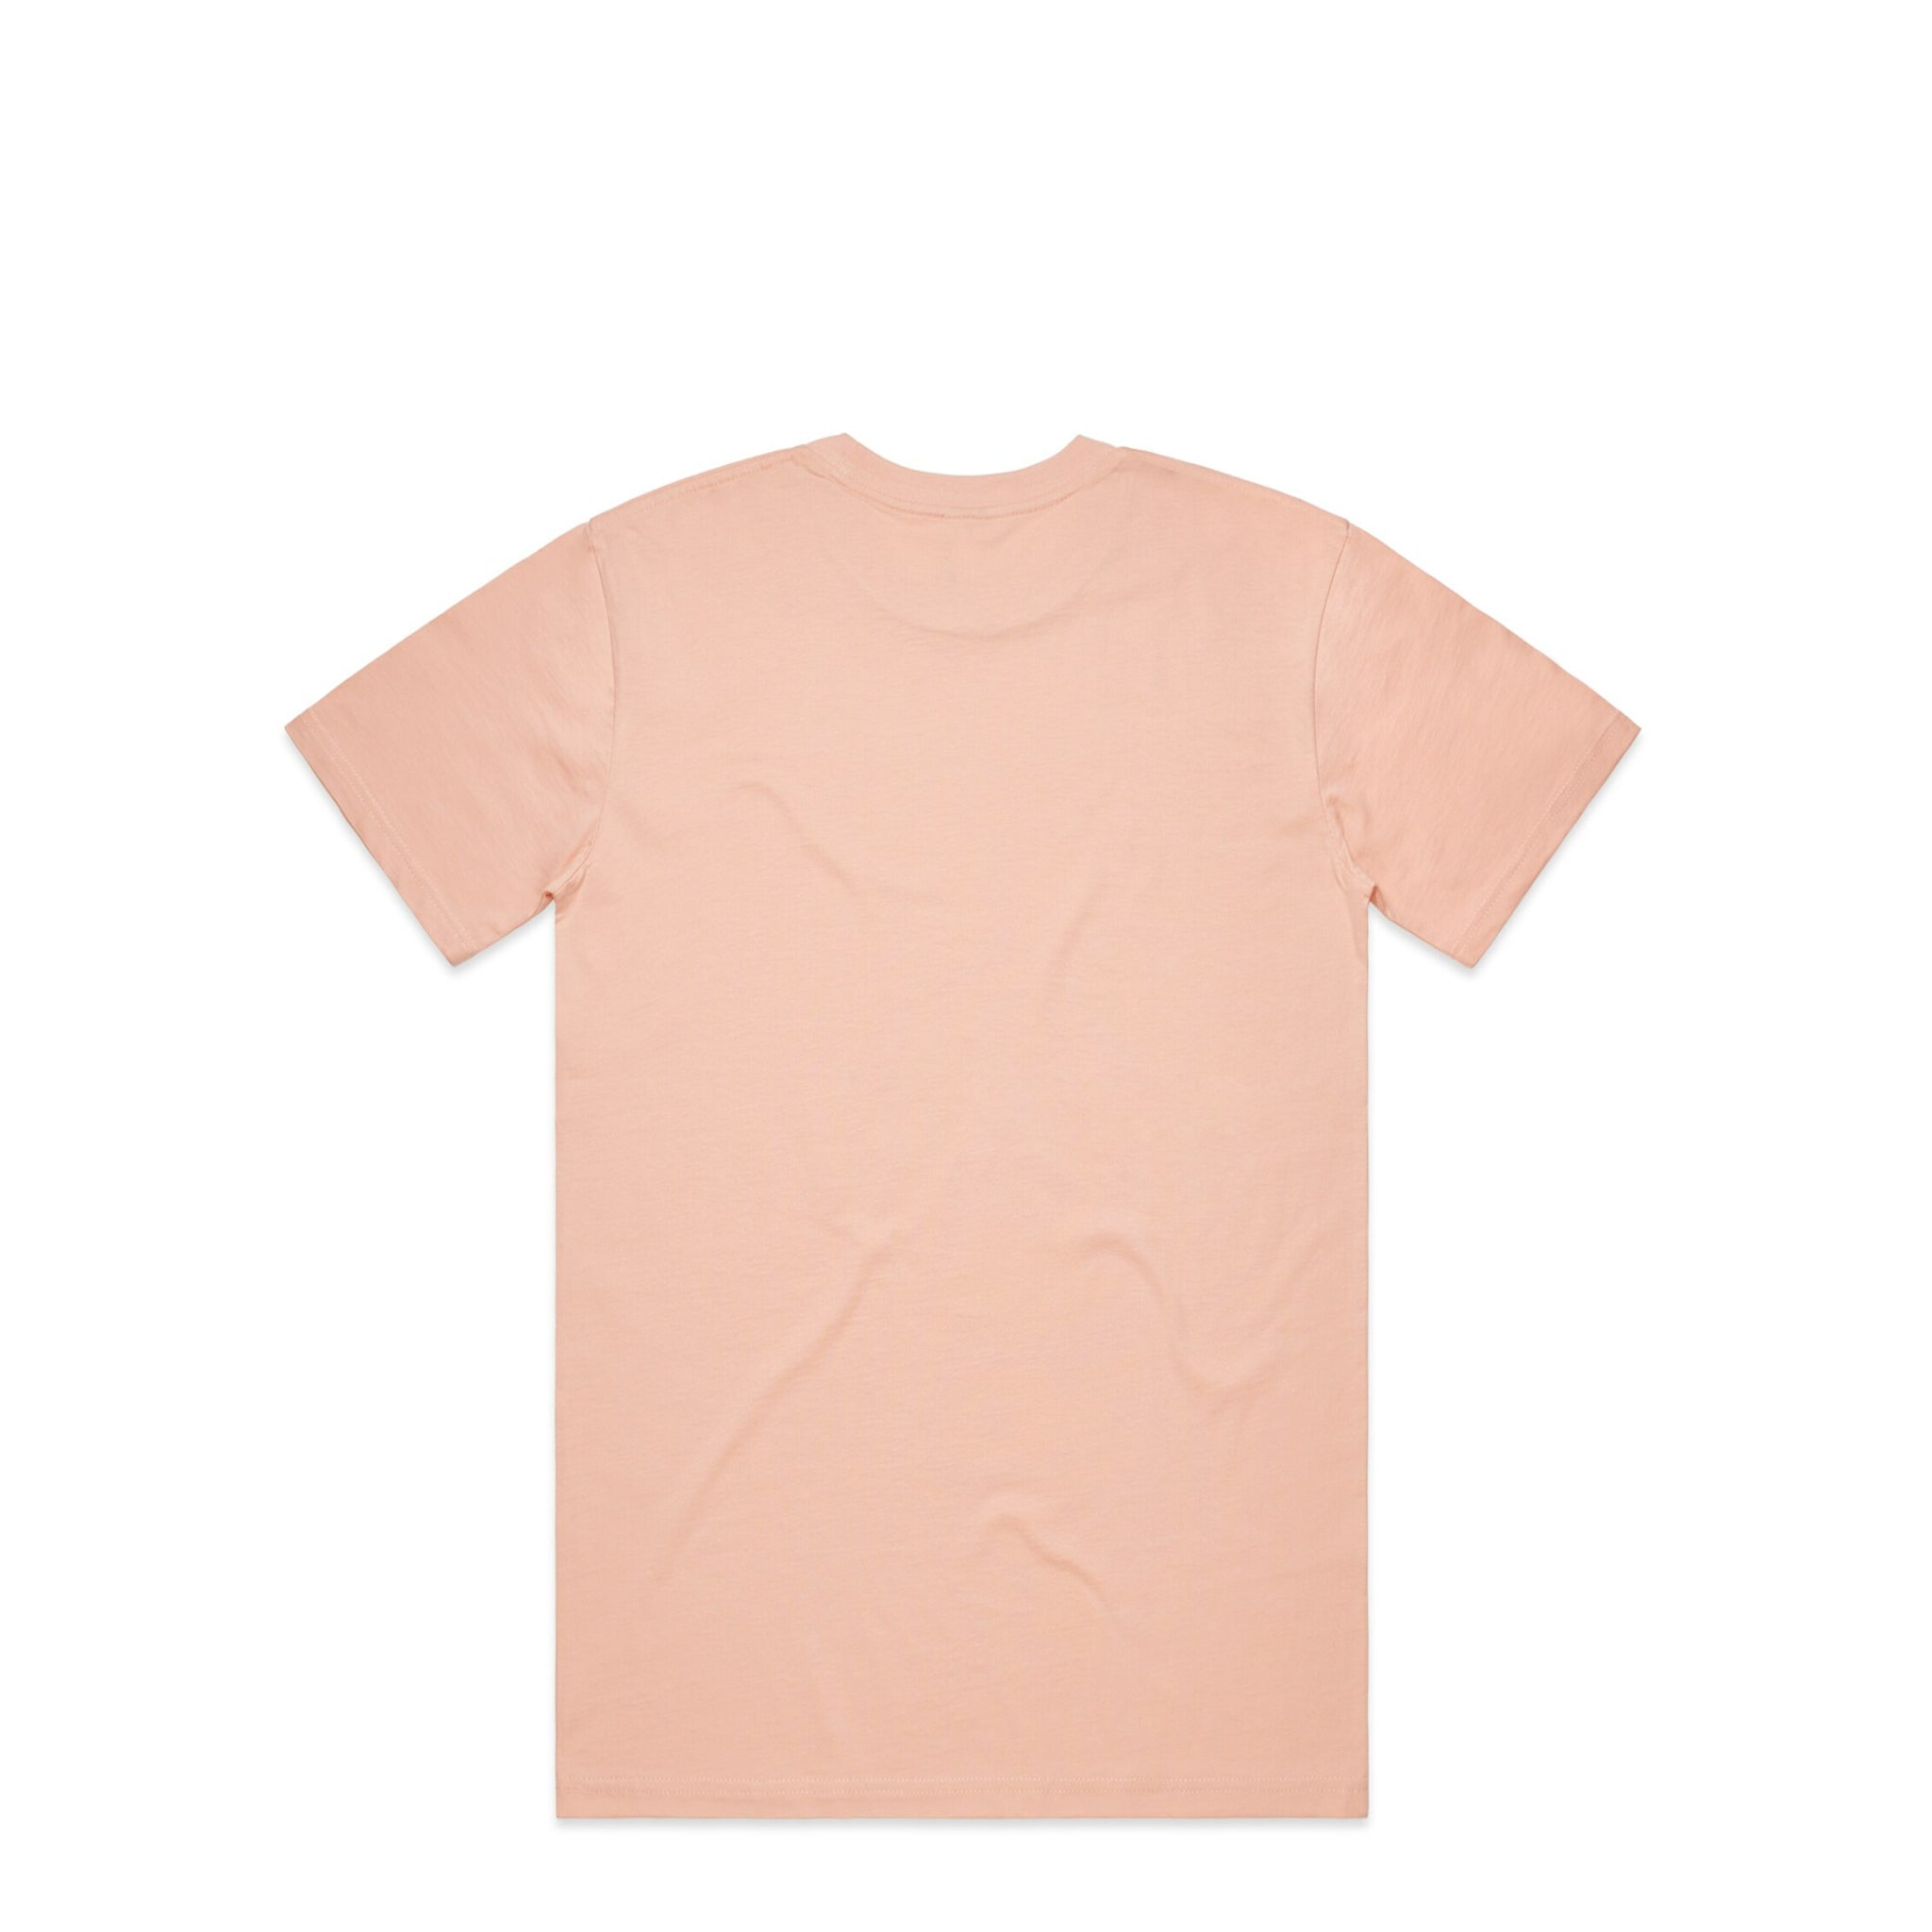 Rockstar Pink Roundel Premium T-Shirt – Pale Pink